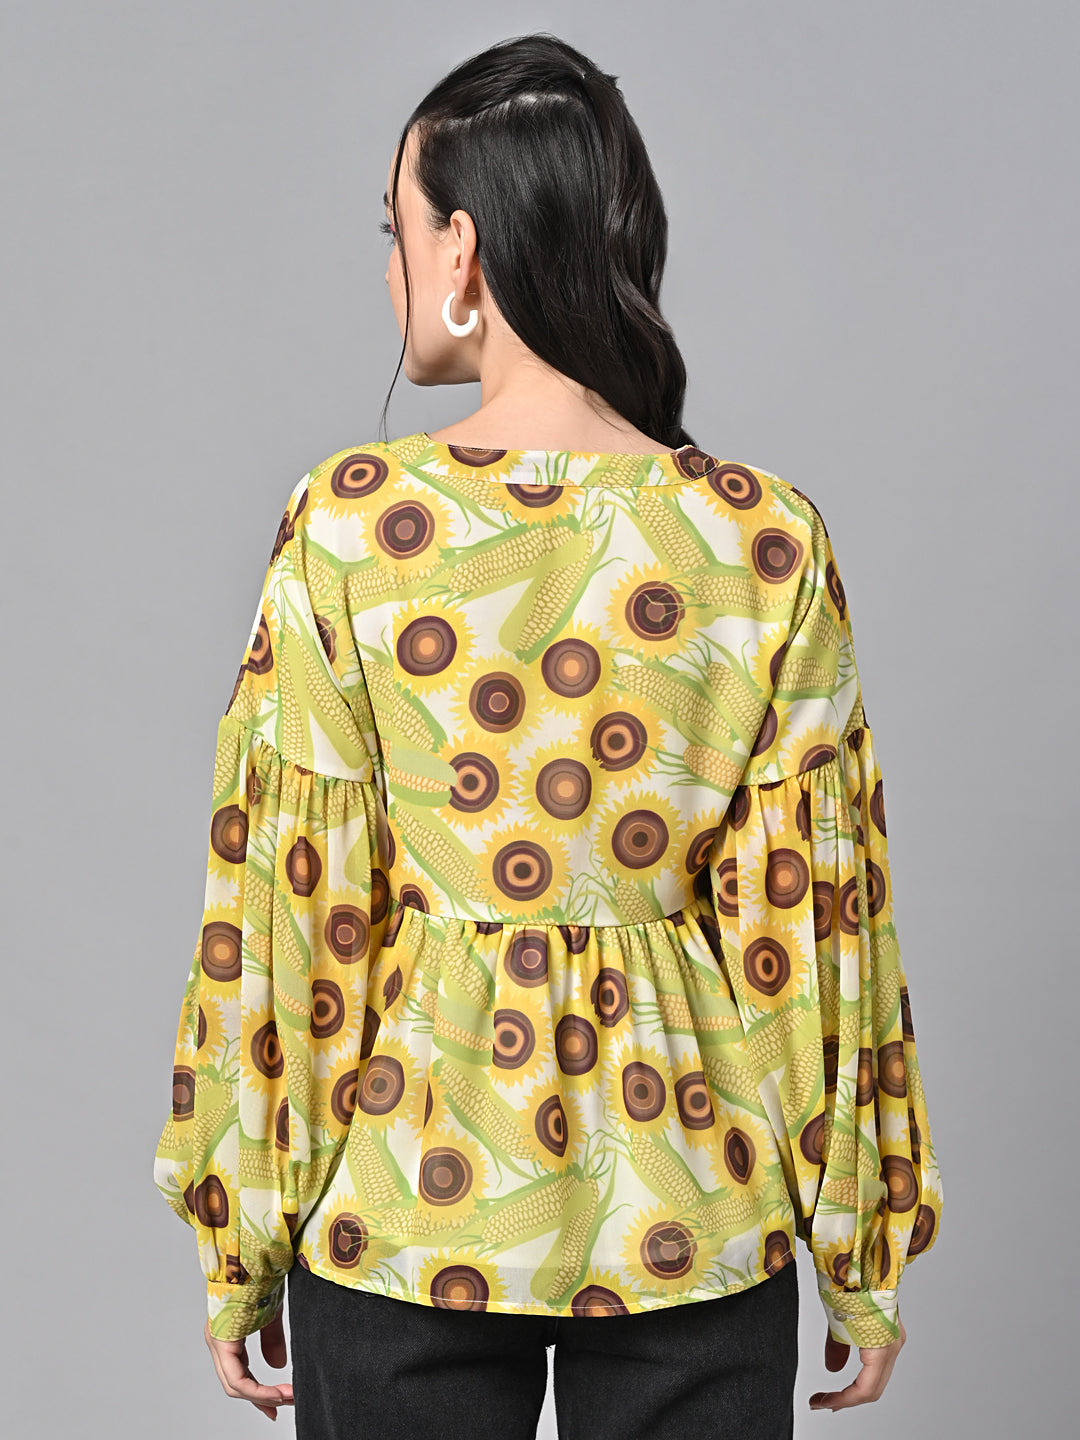 Valbone Women’s Yellow Color Digital Print Top Full Sleeves